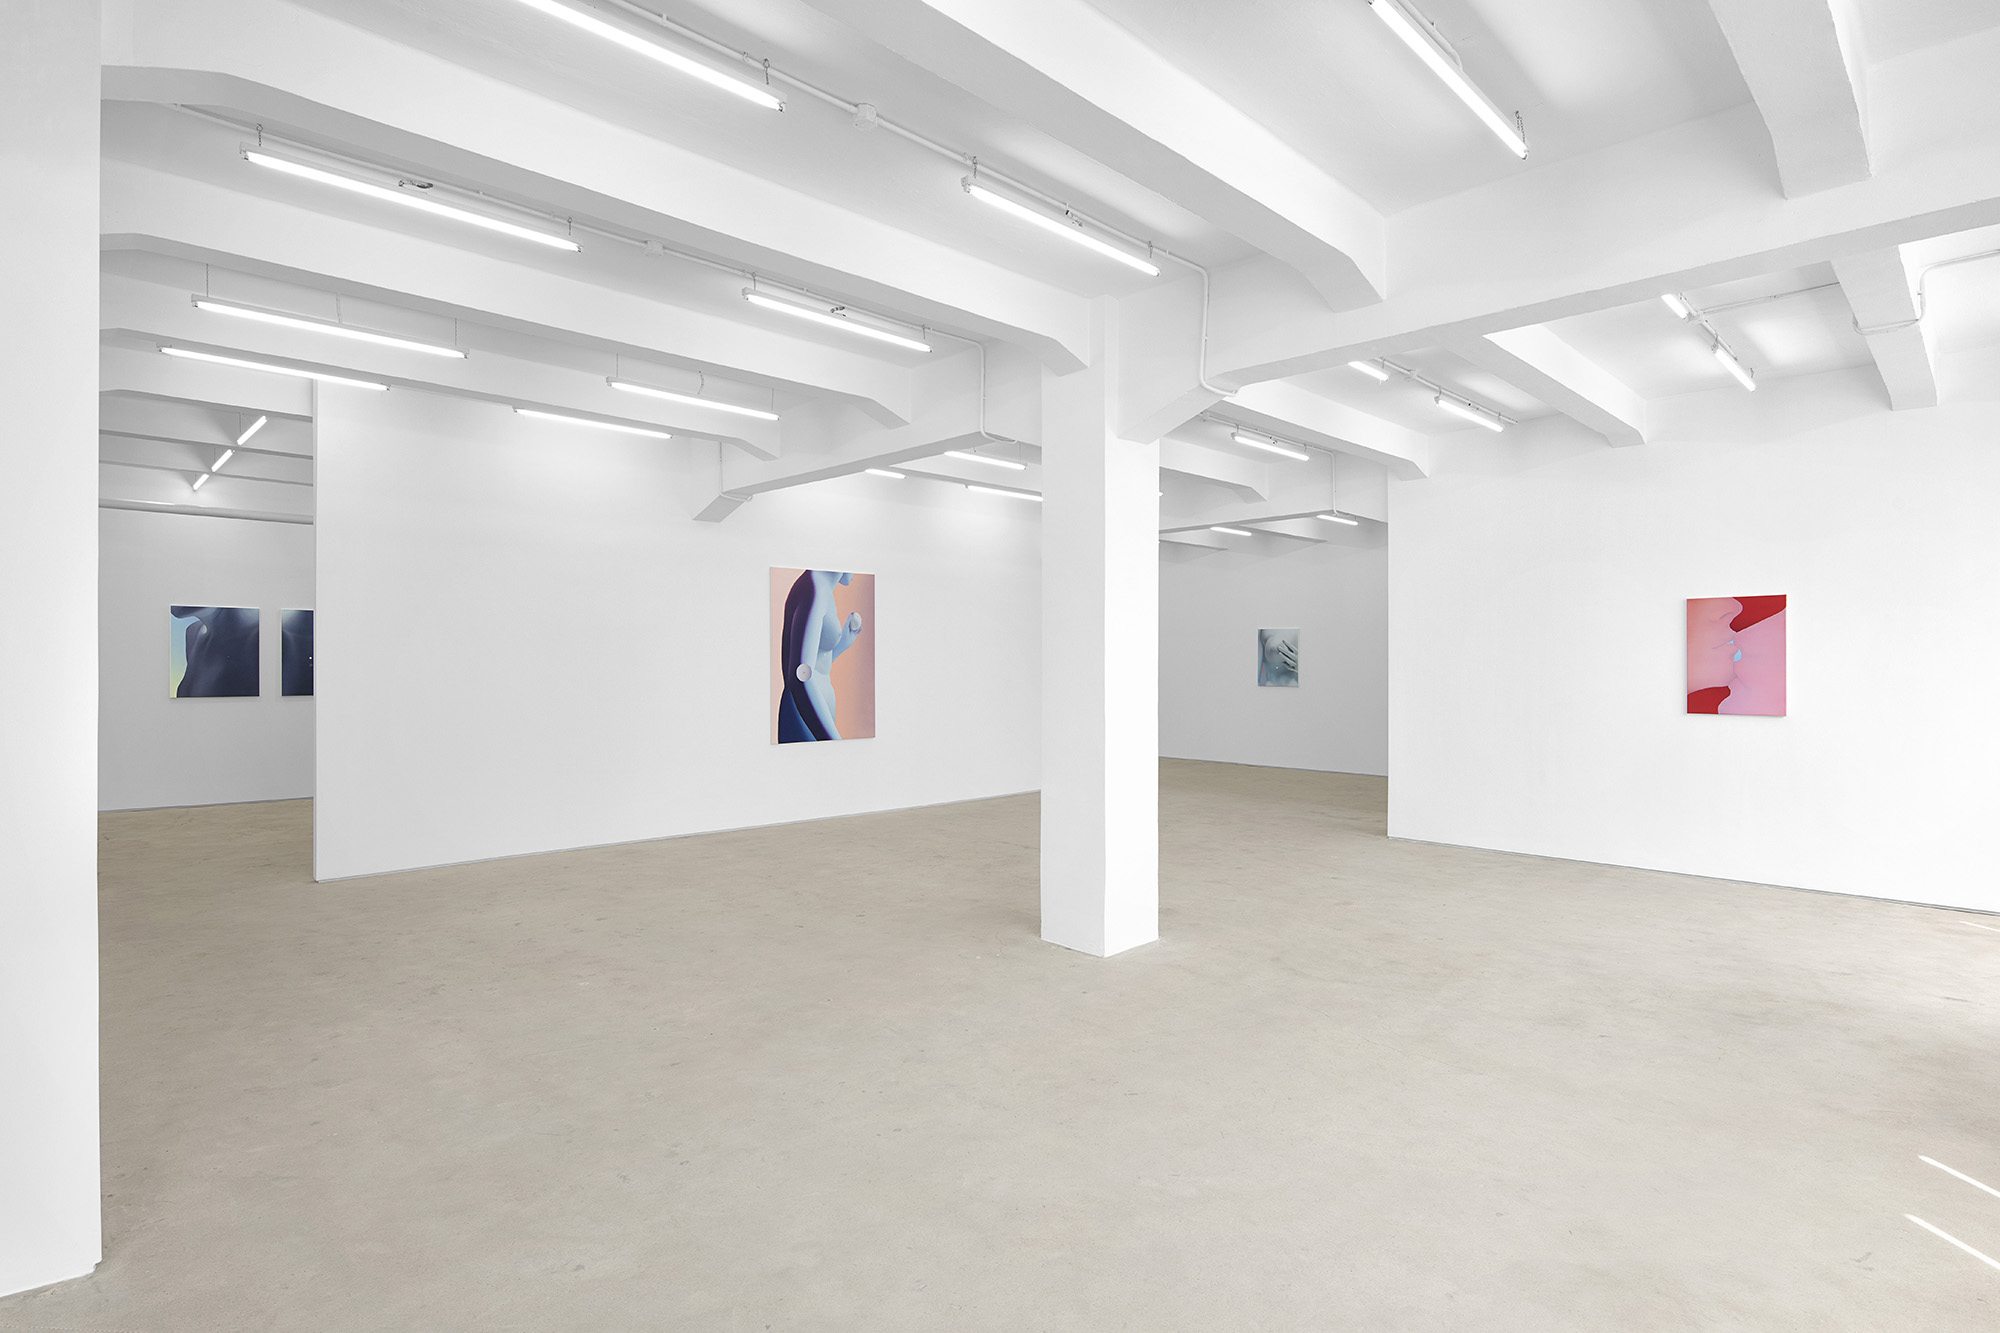 Vivian Greven, The Negatives, solo exhibition at Gallery Vacancy, installation view 6